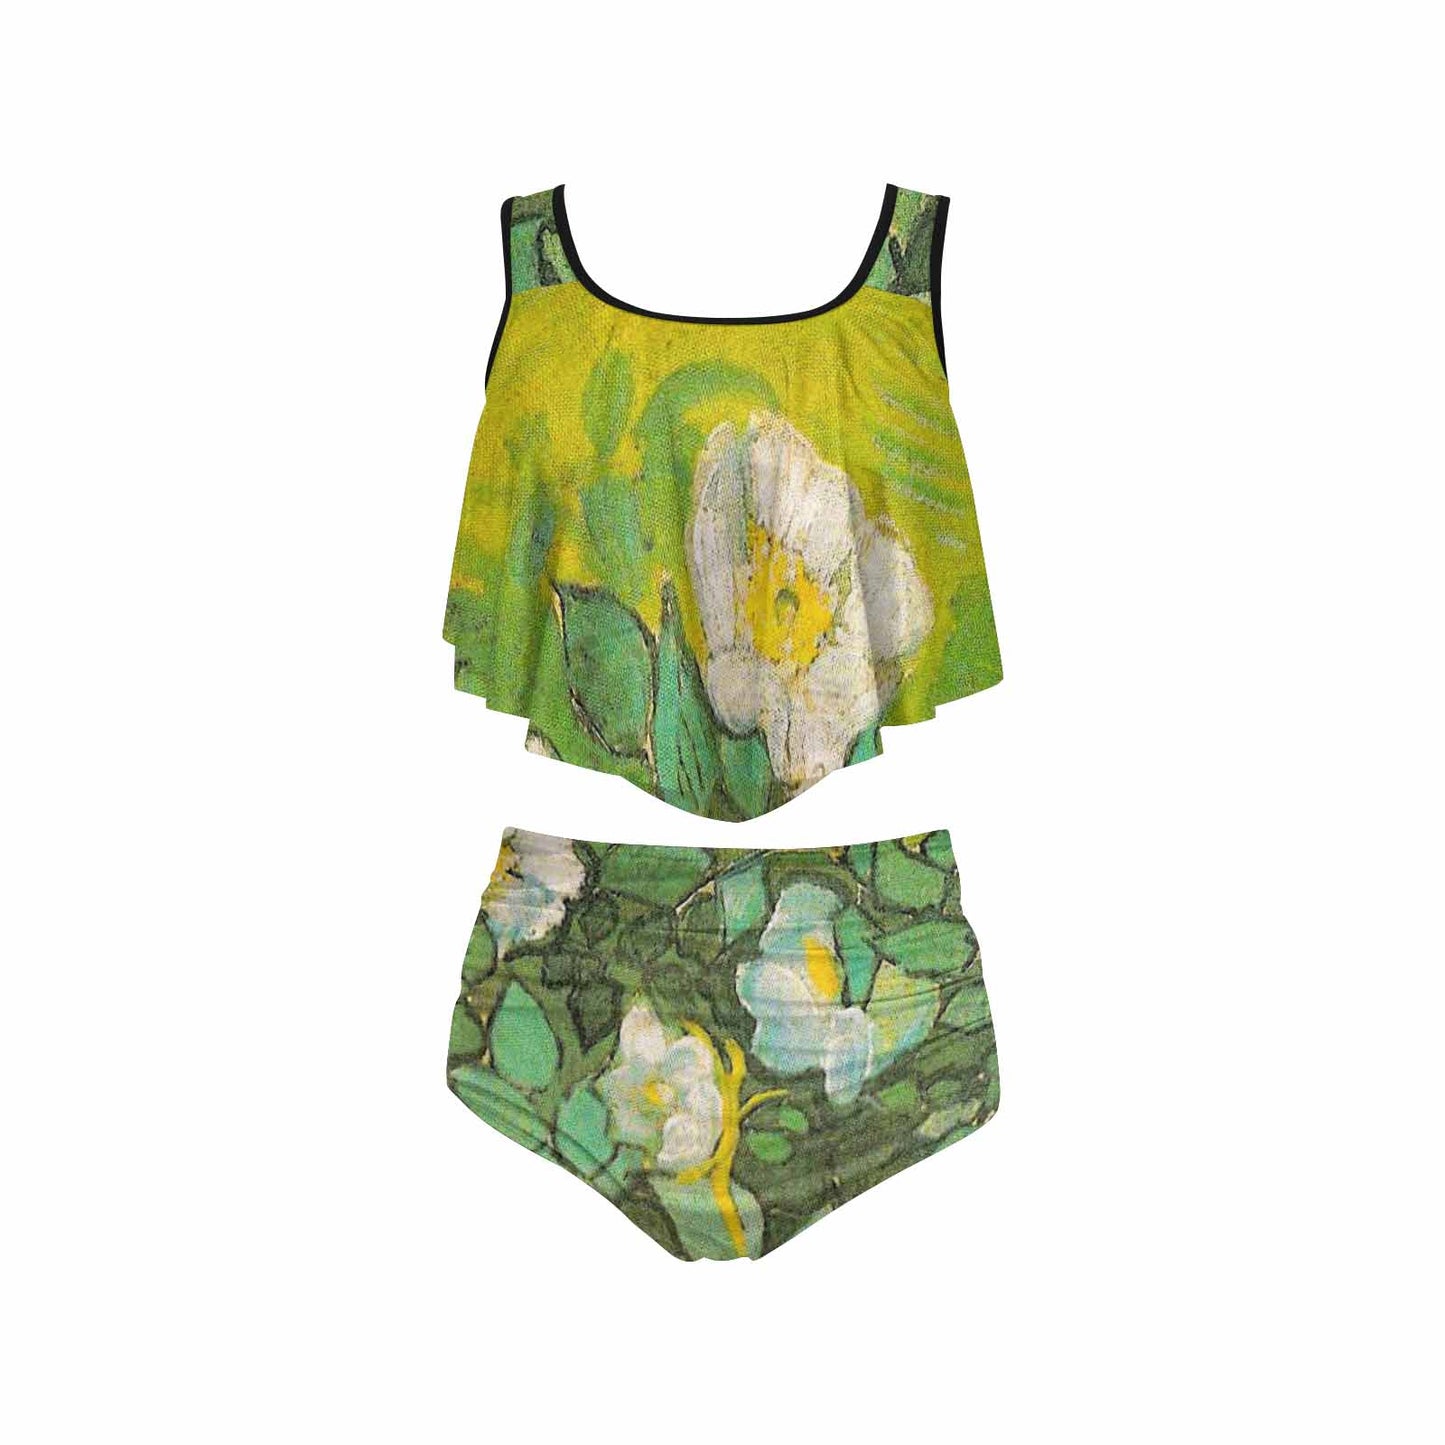 Vintage floral high waisted flounce top bikini, swim wear, Design 01